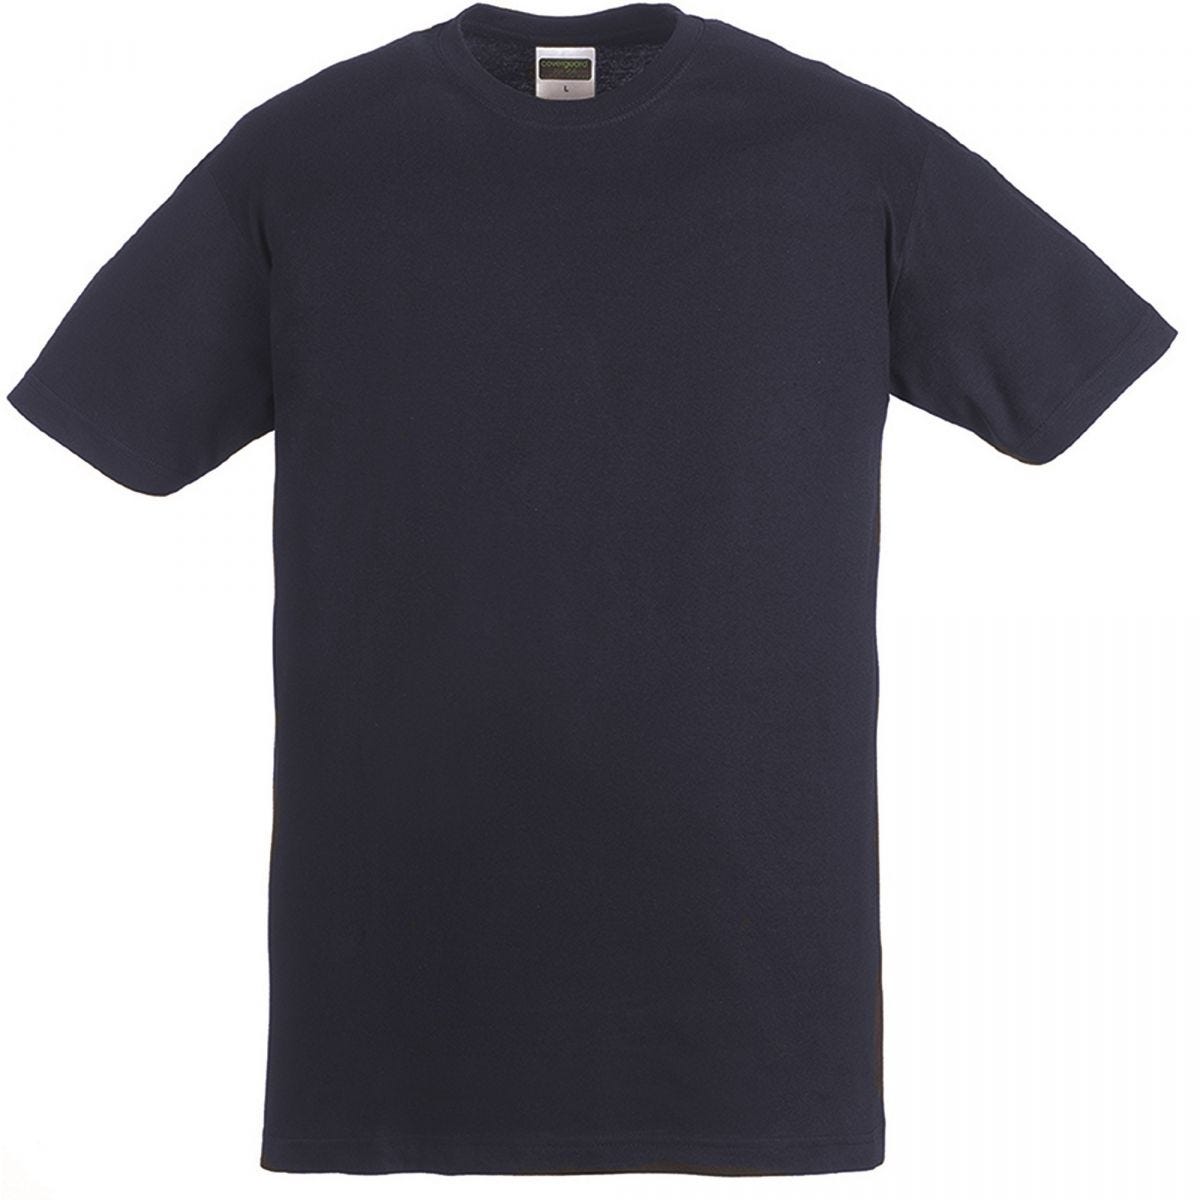 HIKE T-shirt MC marine, 100% coton, 190g/m² - COVERGUARD - Taille XL 0